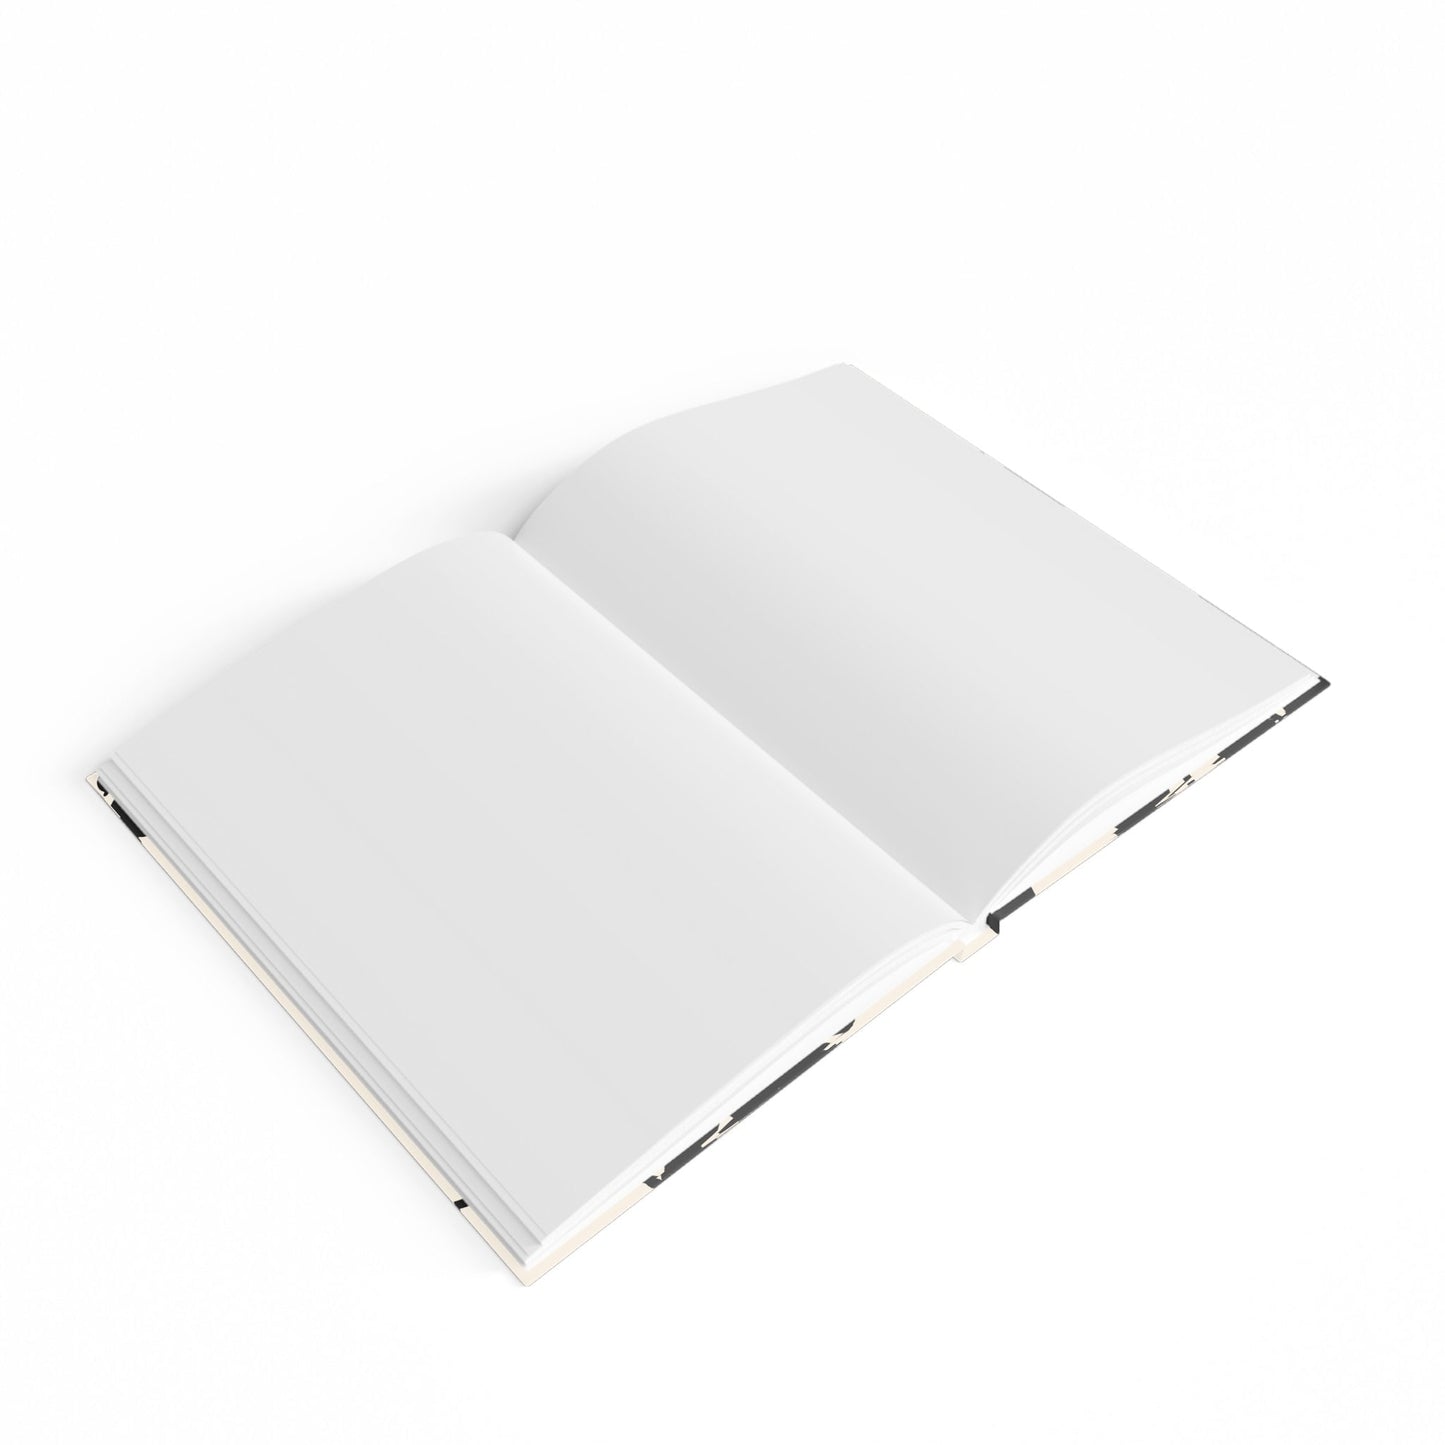 Start a new chapter - Hard Backed Journal - Notizbuch - Skizzenbuch - Tagebuch Blumen